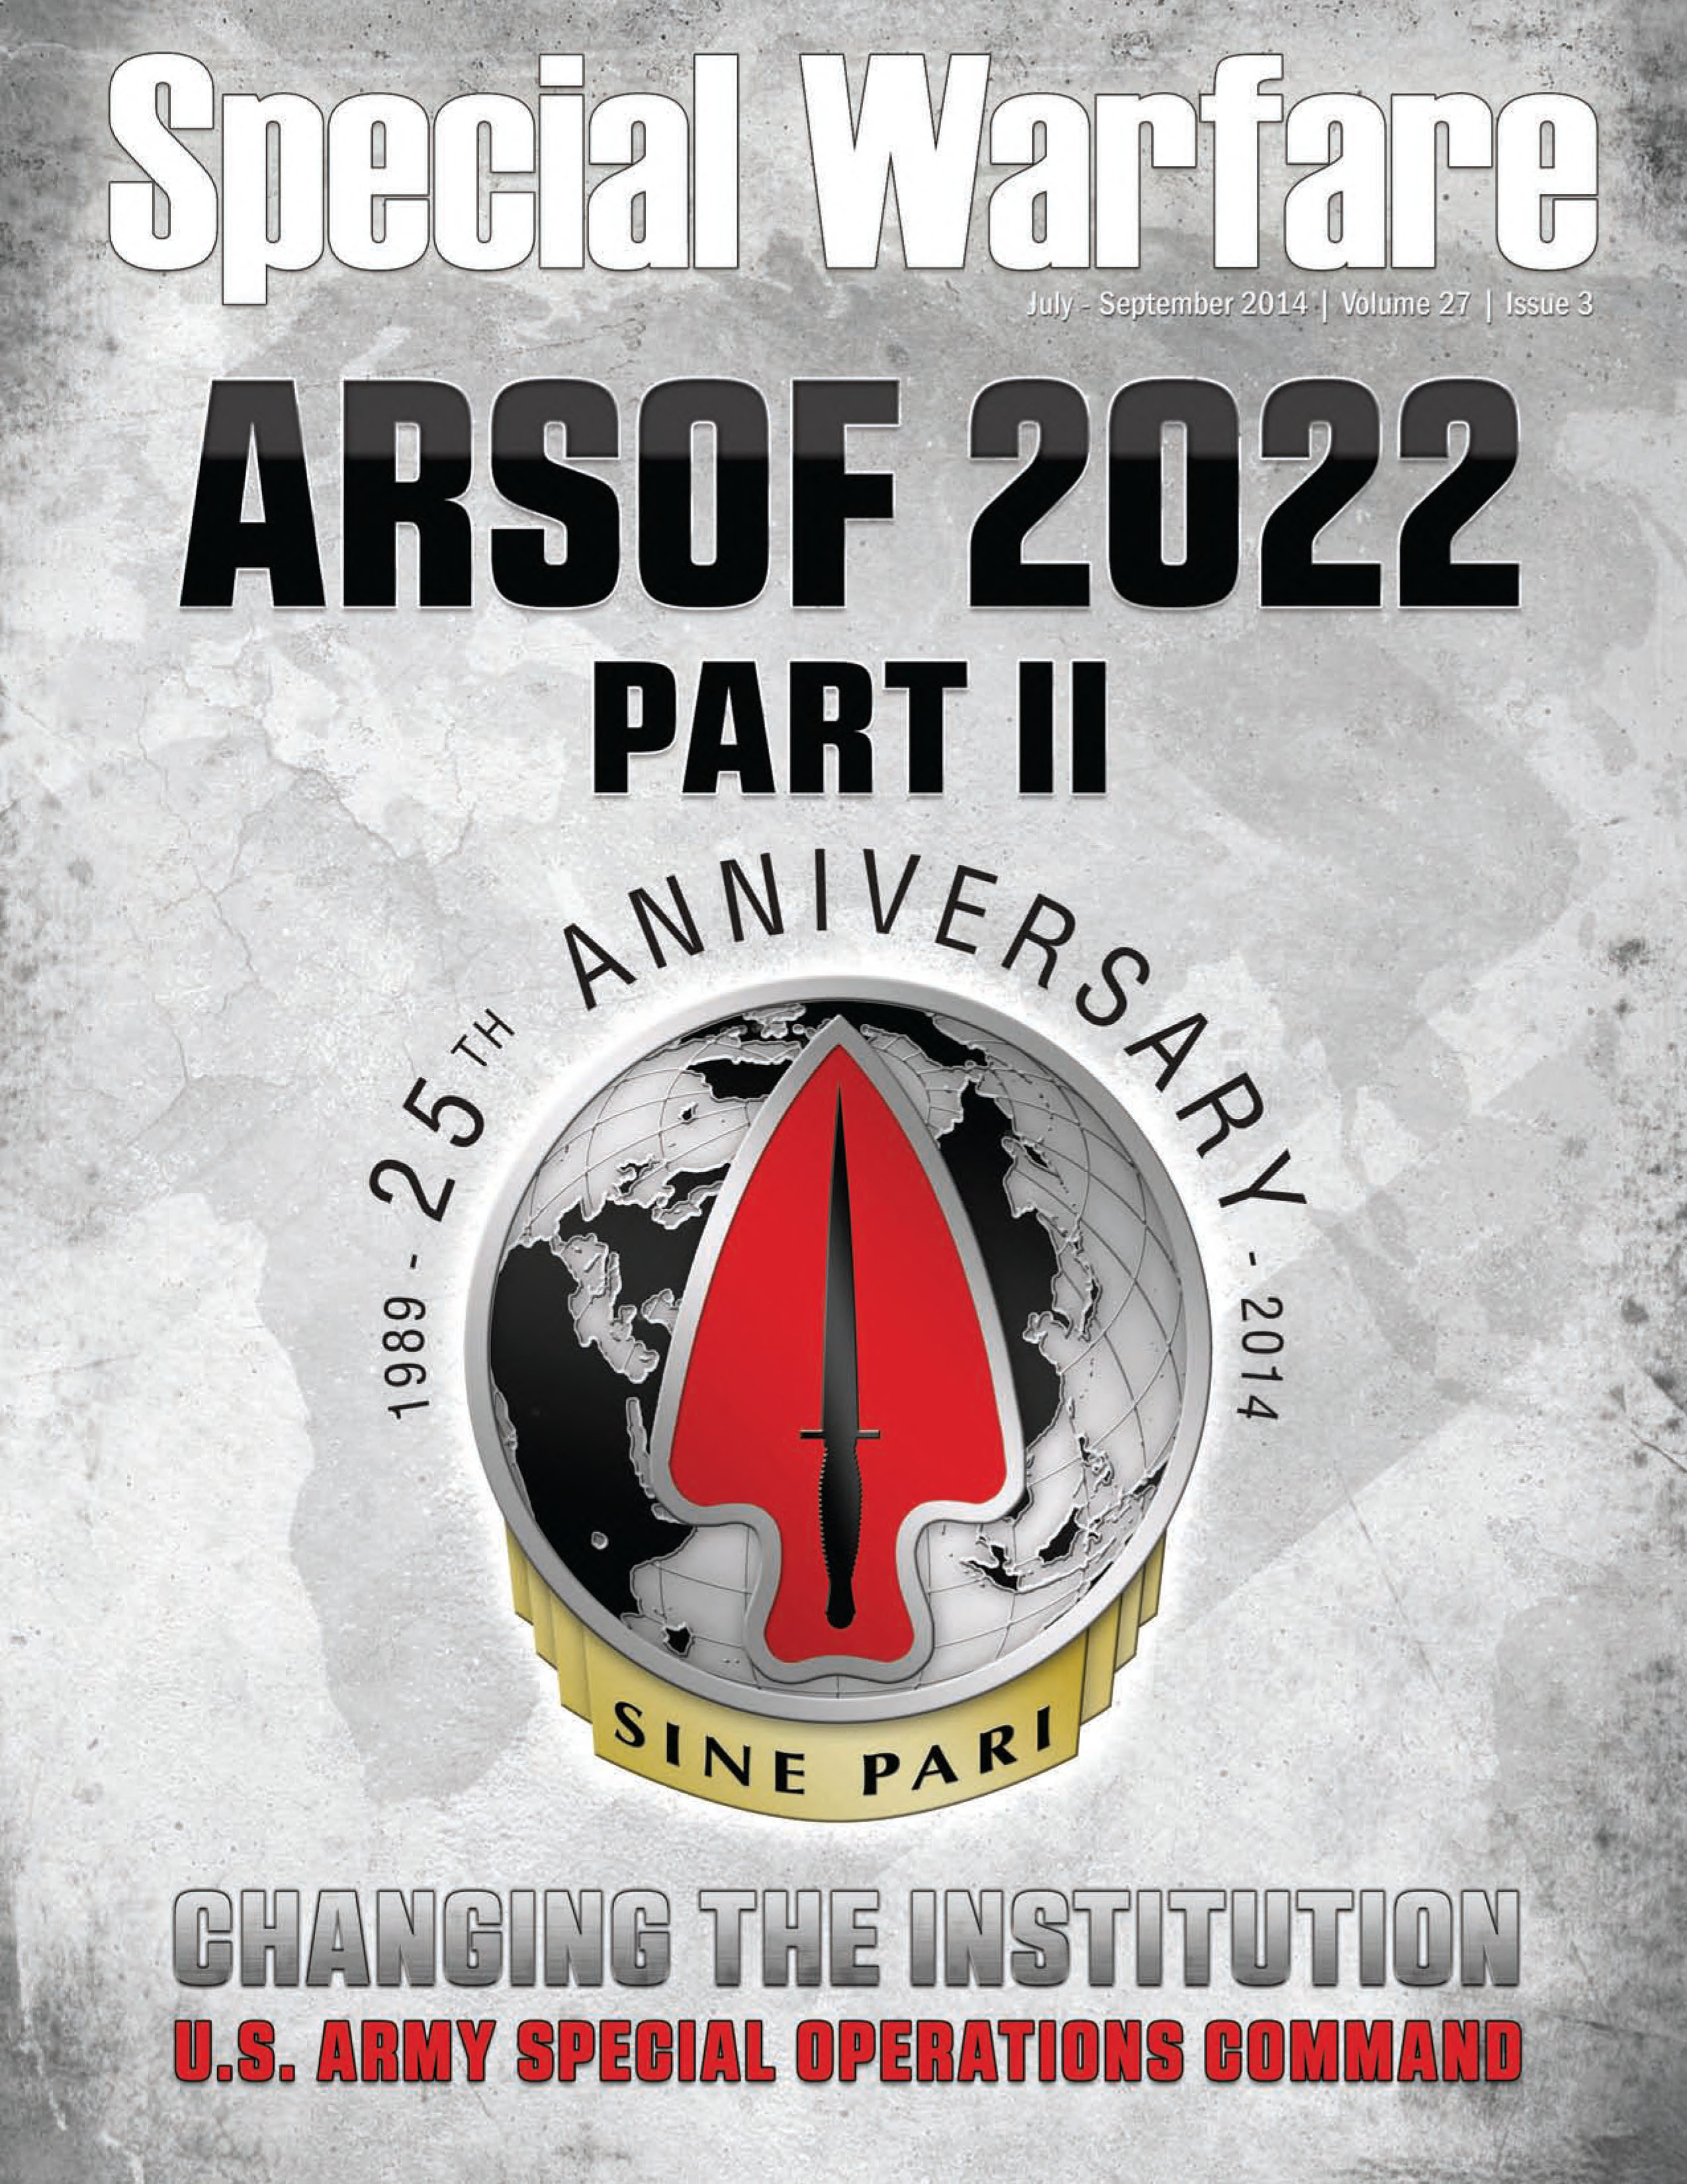 Special Warfare ARSOF 2022 Part II